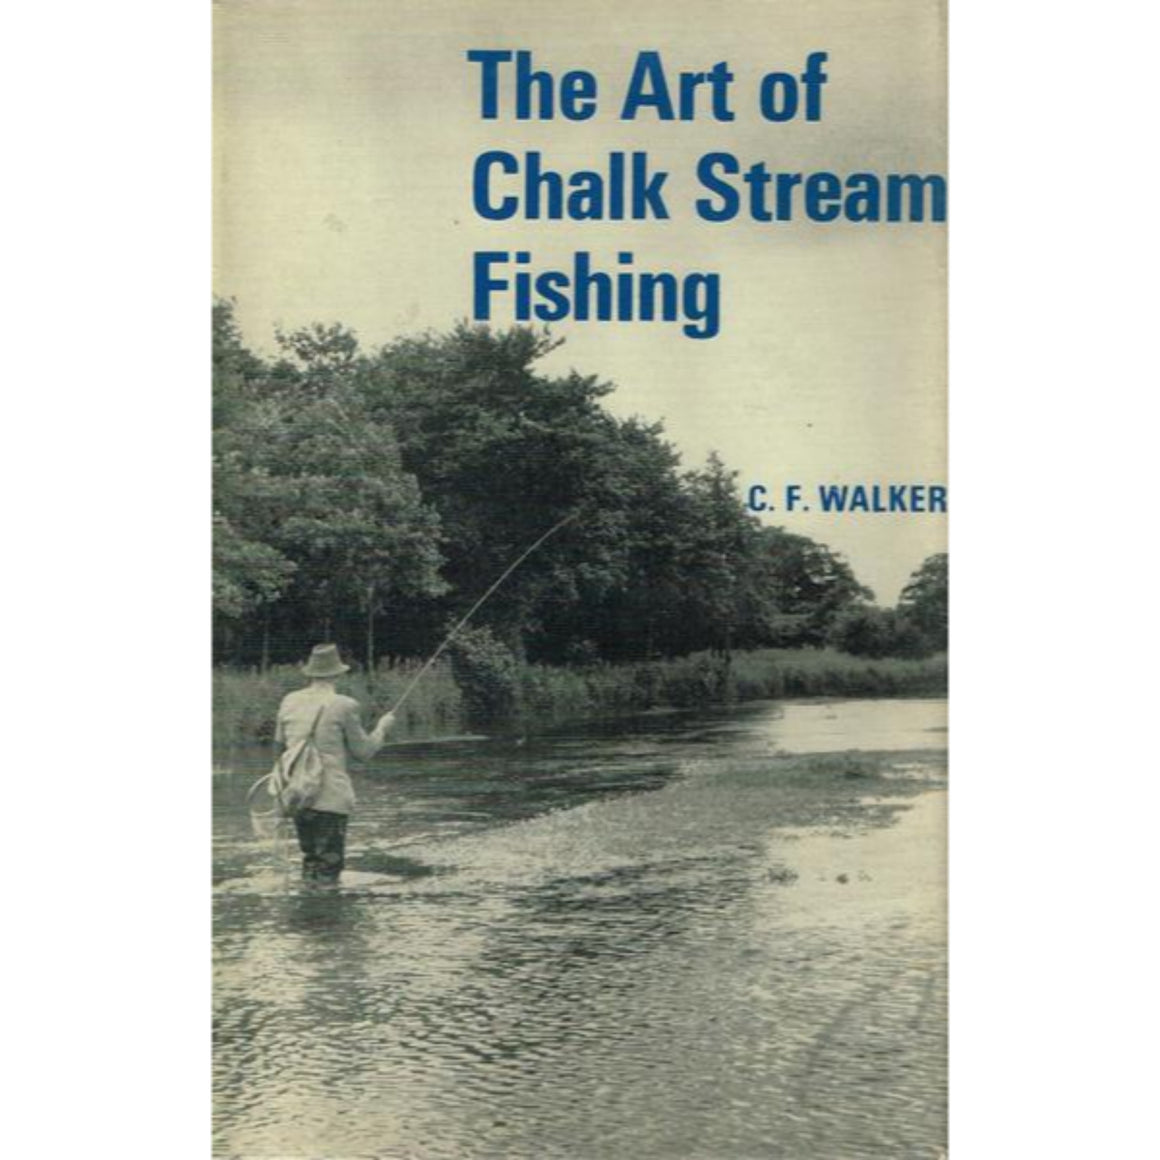 The Art of Chalk Stream Fishing